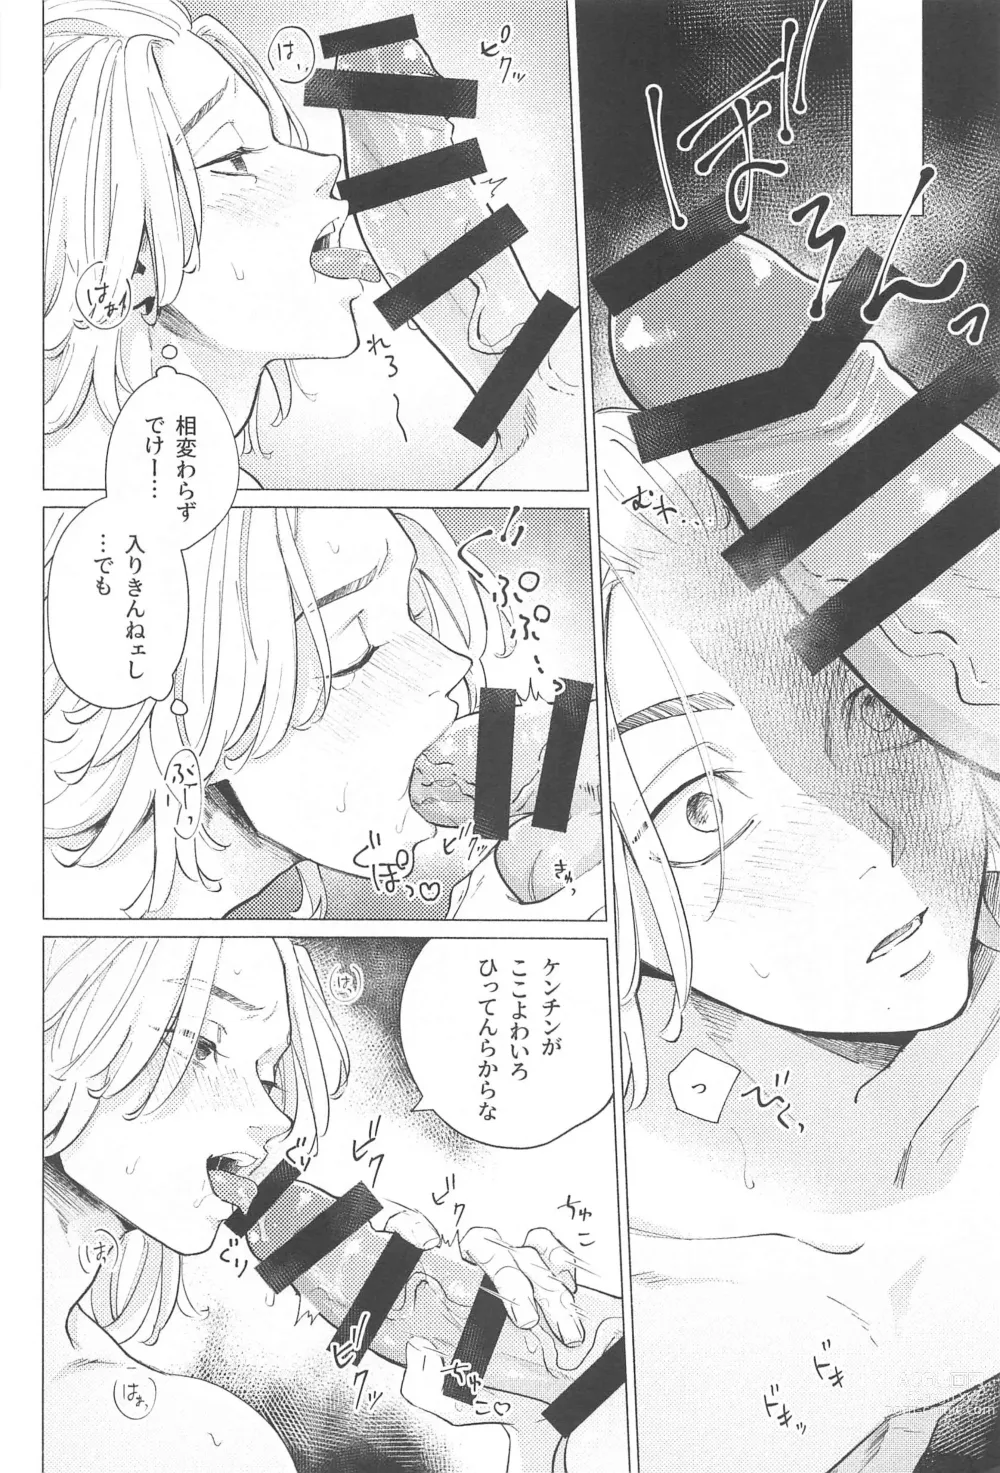 Page 7 of doujinshi Endure.